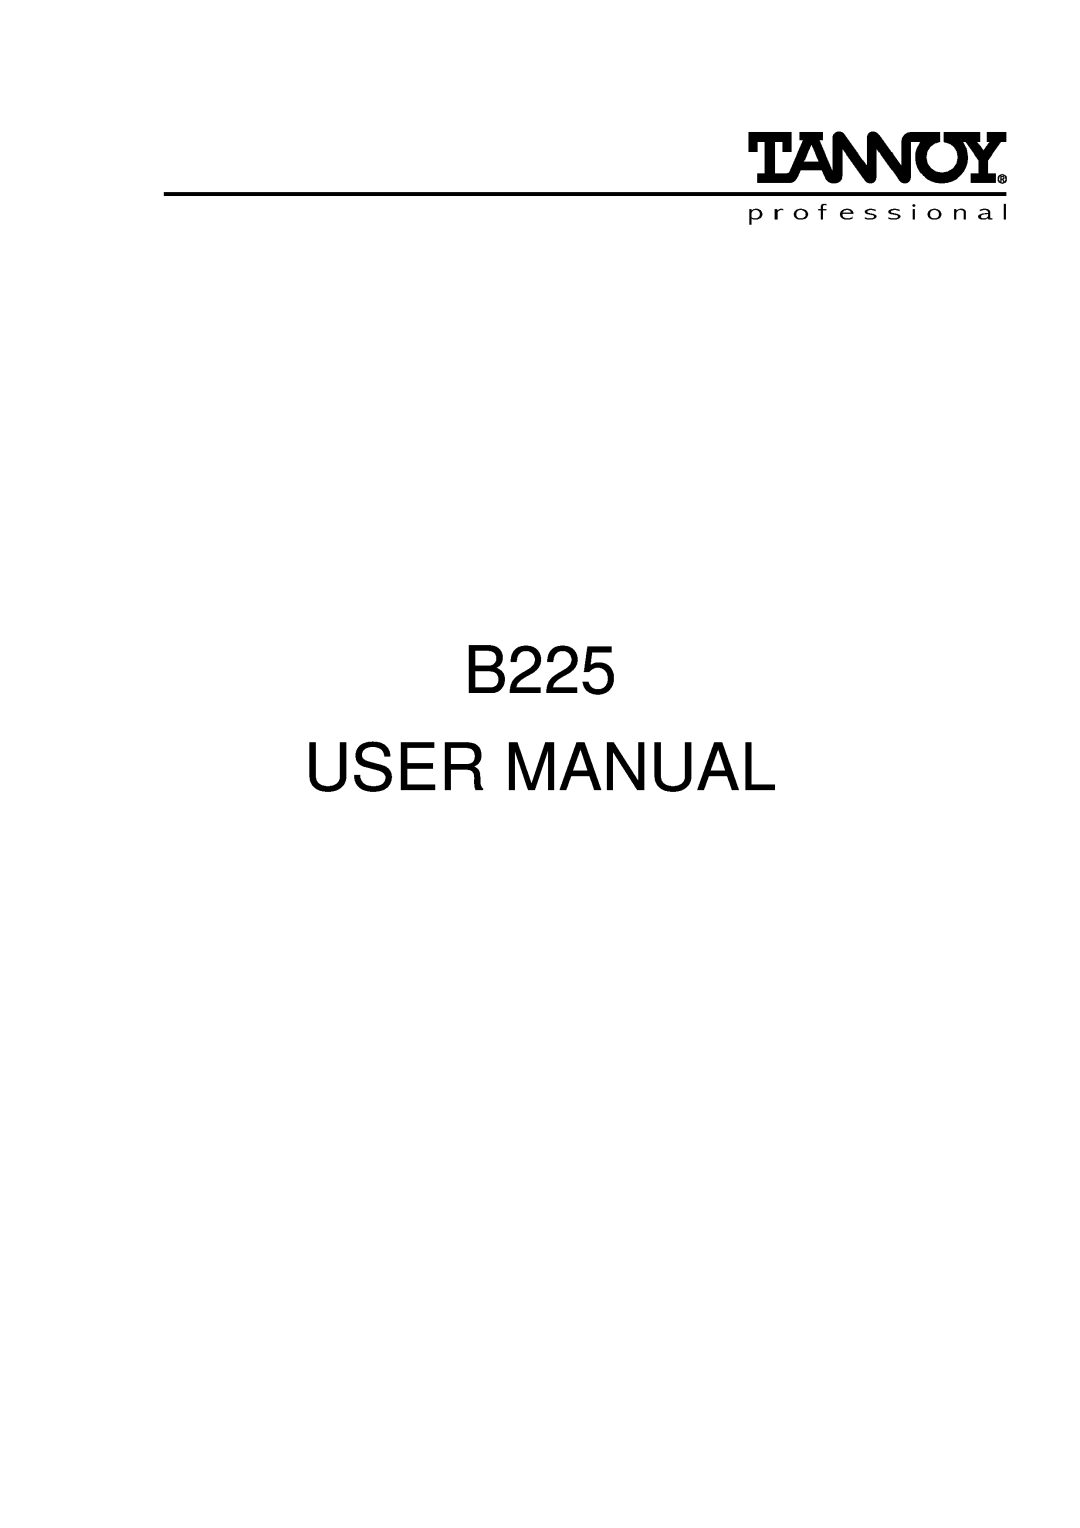 Tannoy B225 user manual 